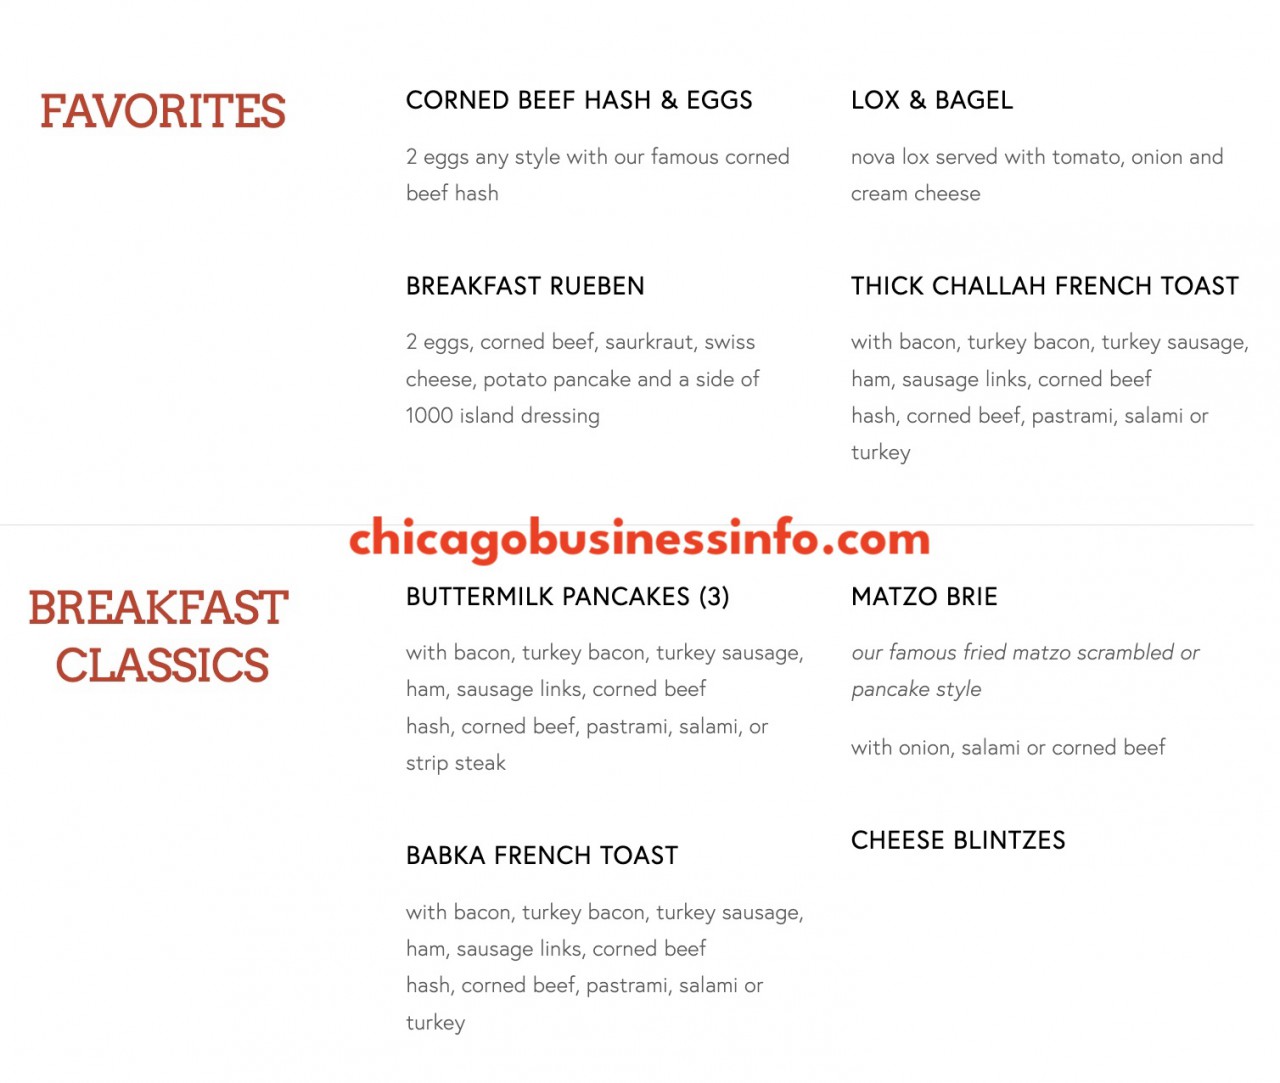 Mannys deli chicago breakfast menu 1